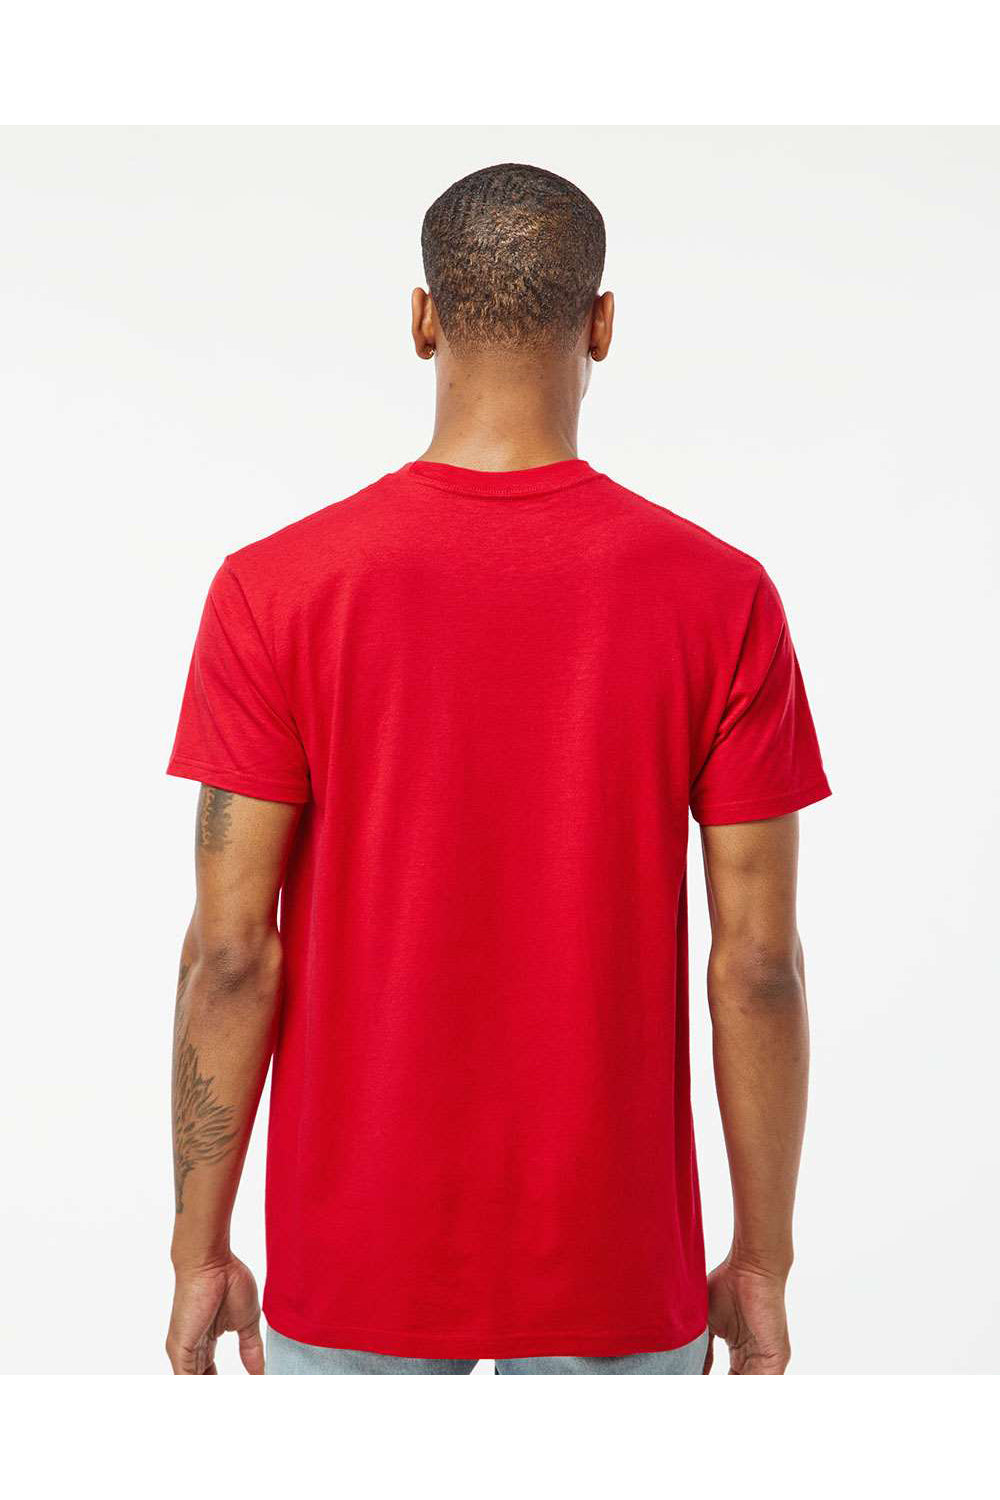 Tultex 293 Mens Jersey Short Sleeve Crewneck T-Shirt w/ Pocket Red Model Back